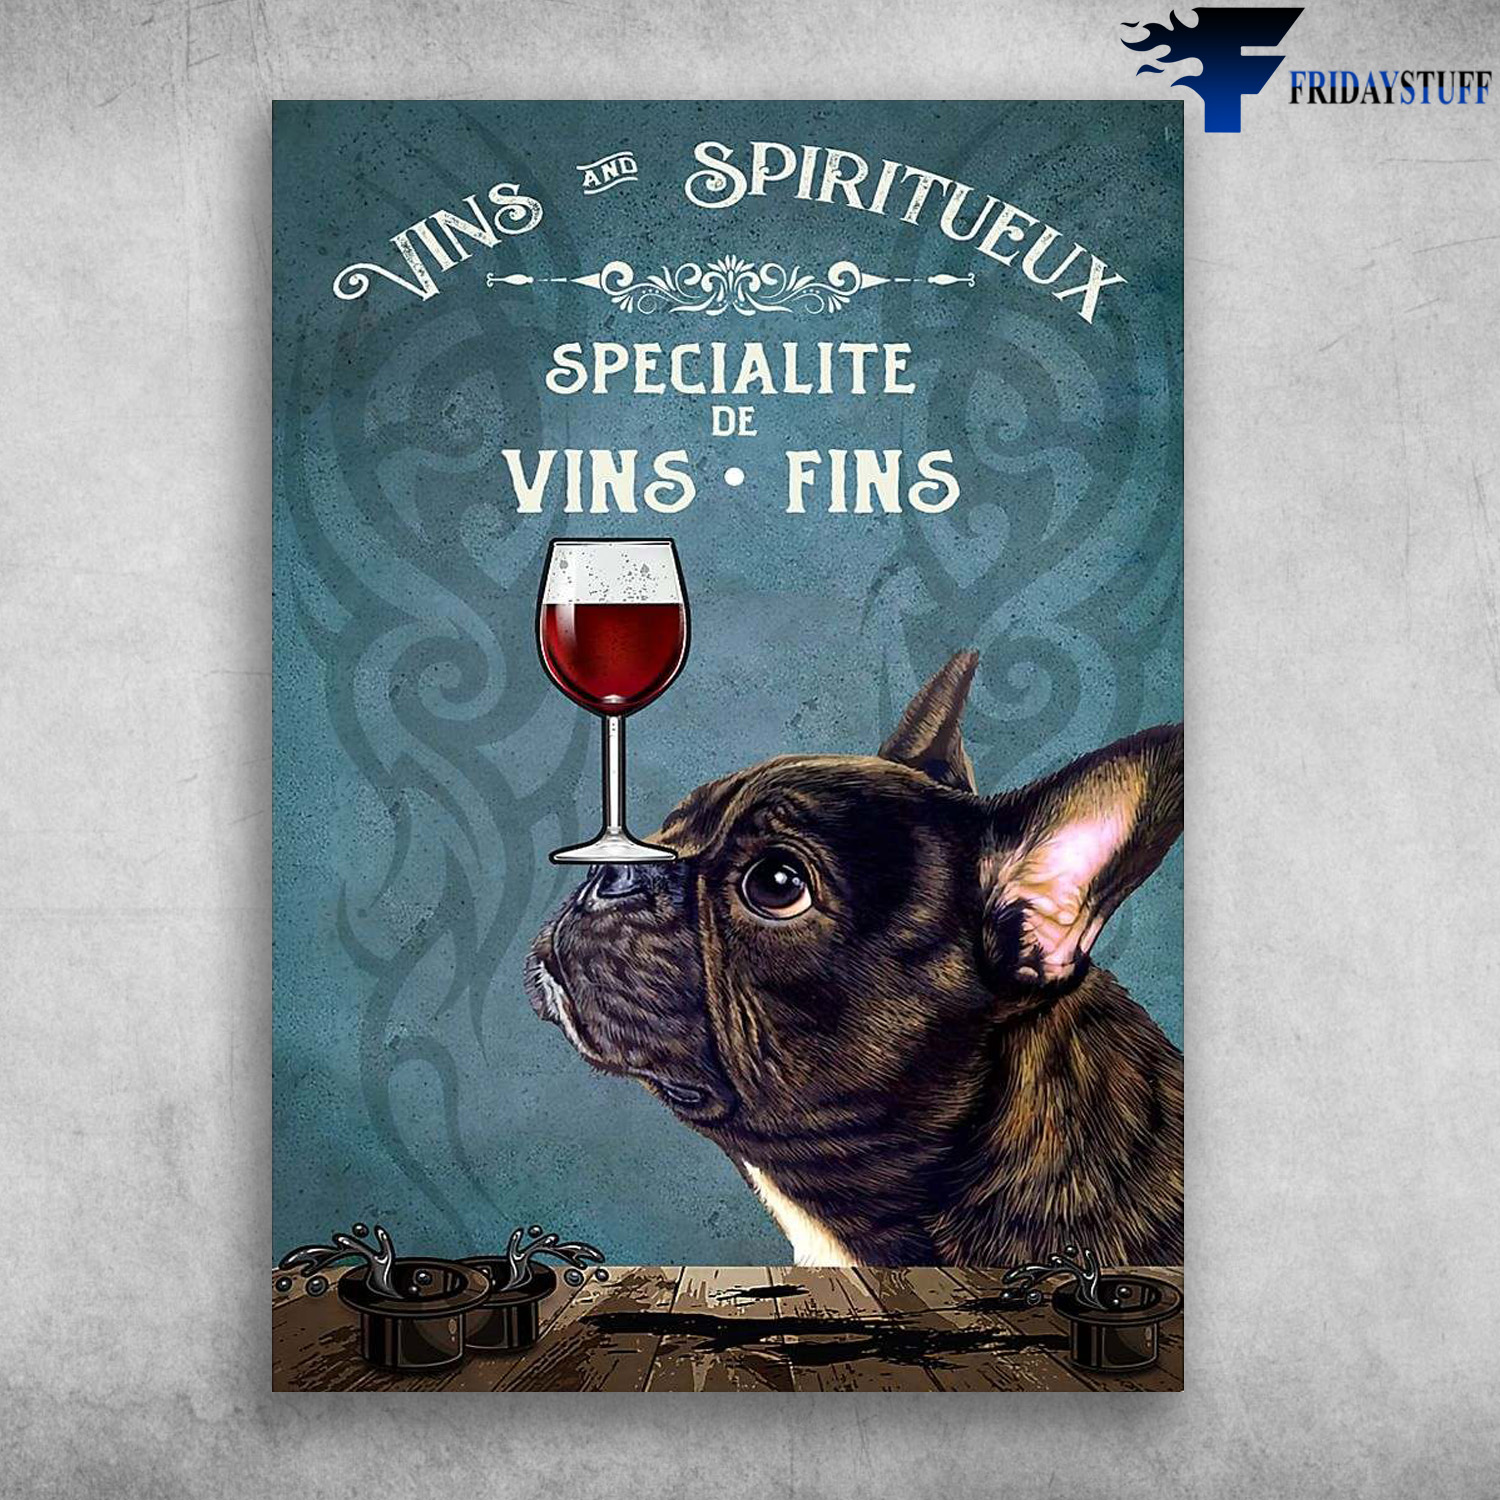 French Bulldog Wine - Vins And Spiritueux, Specialite De Vins Fins